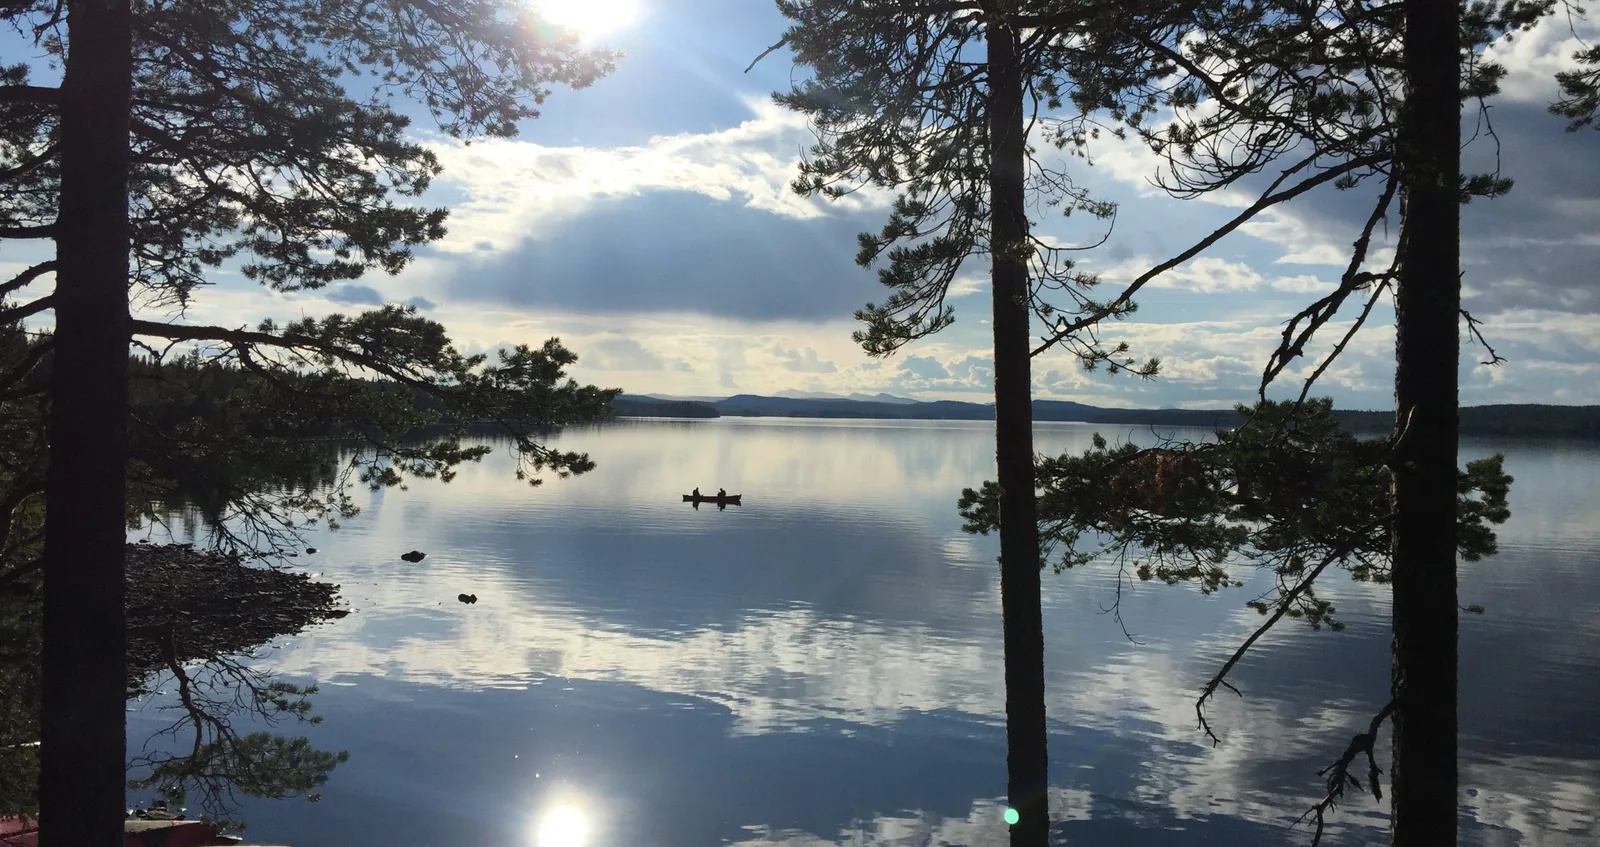 Sweden Canoe Challenge